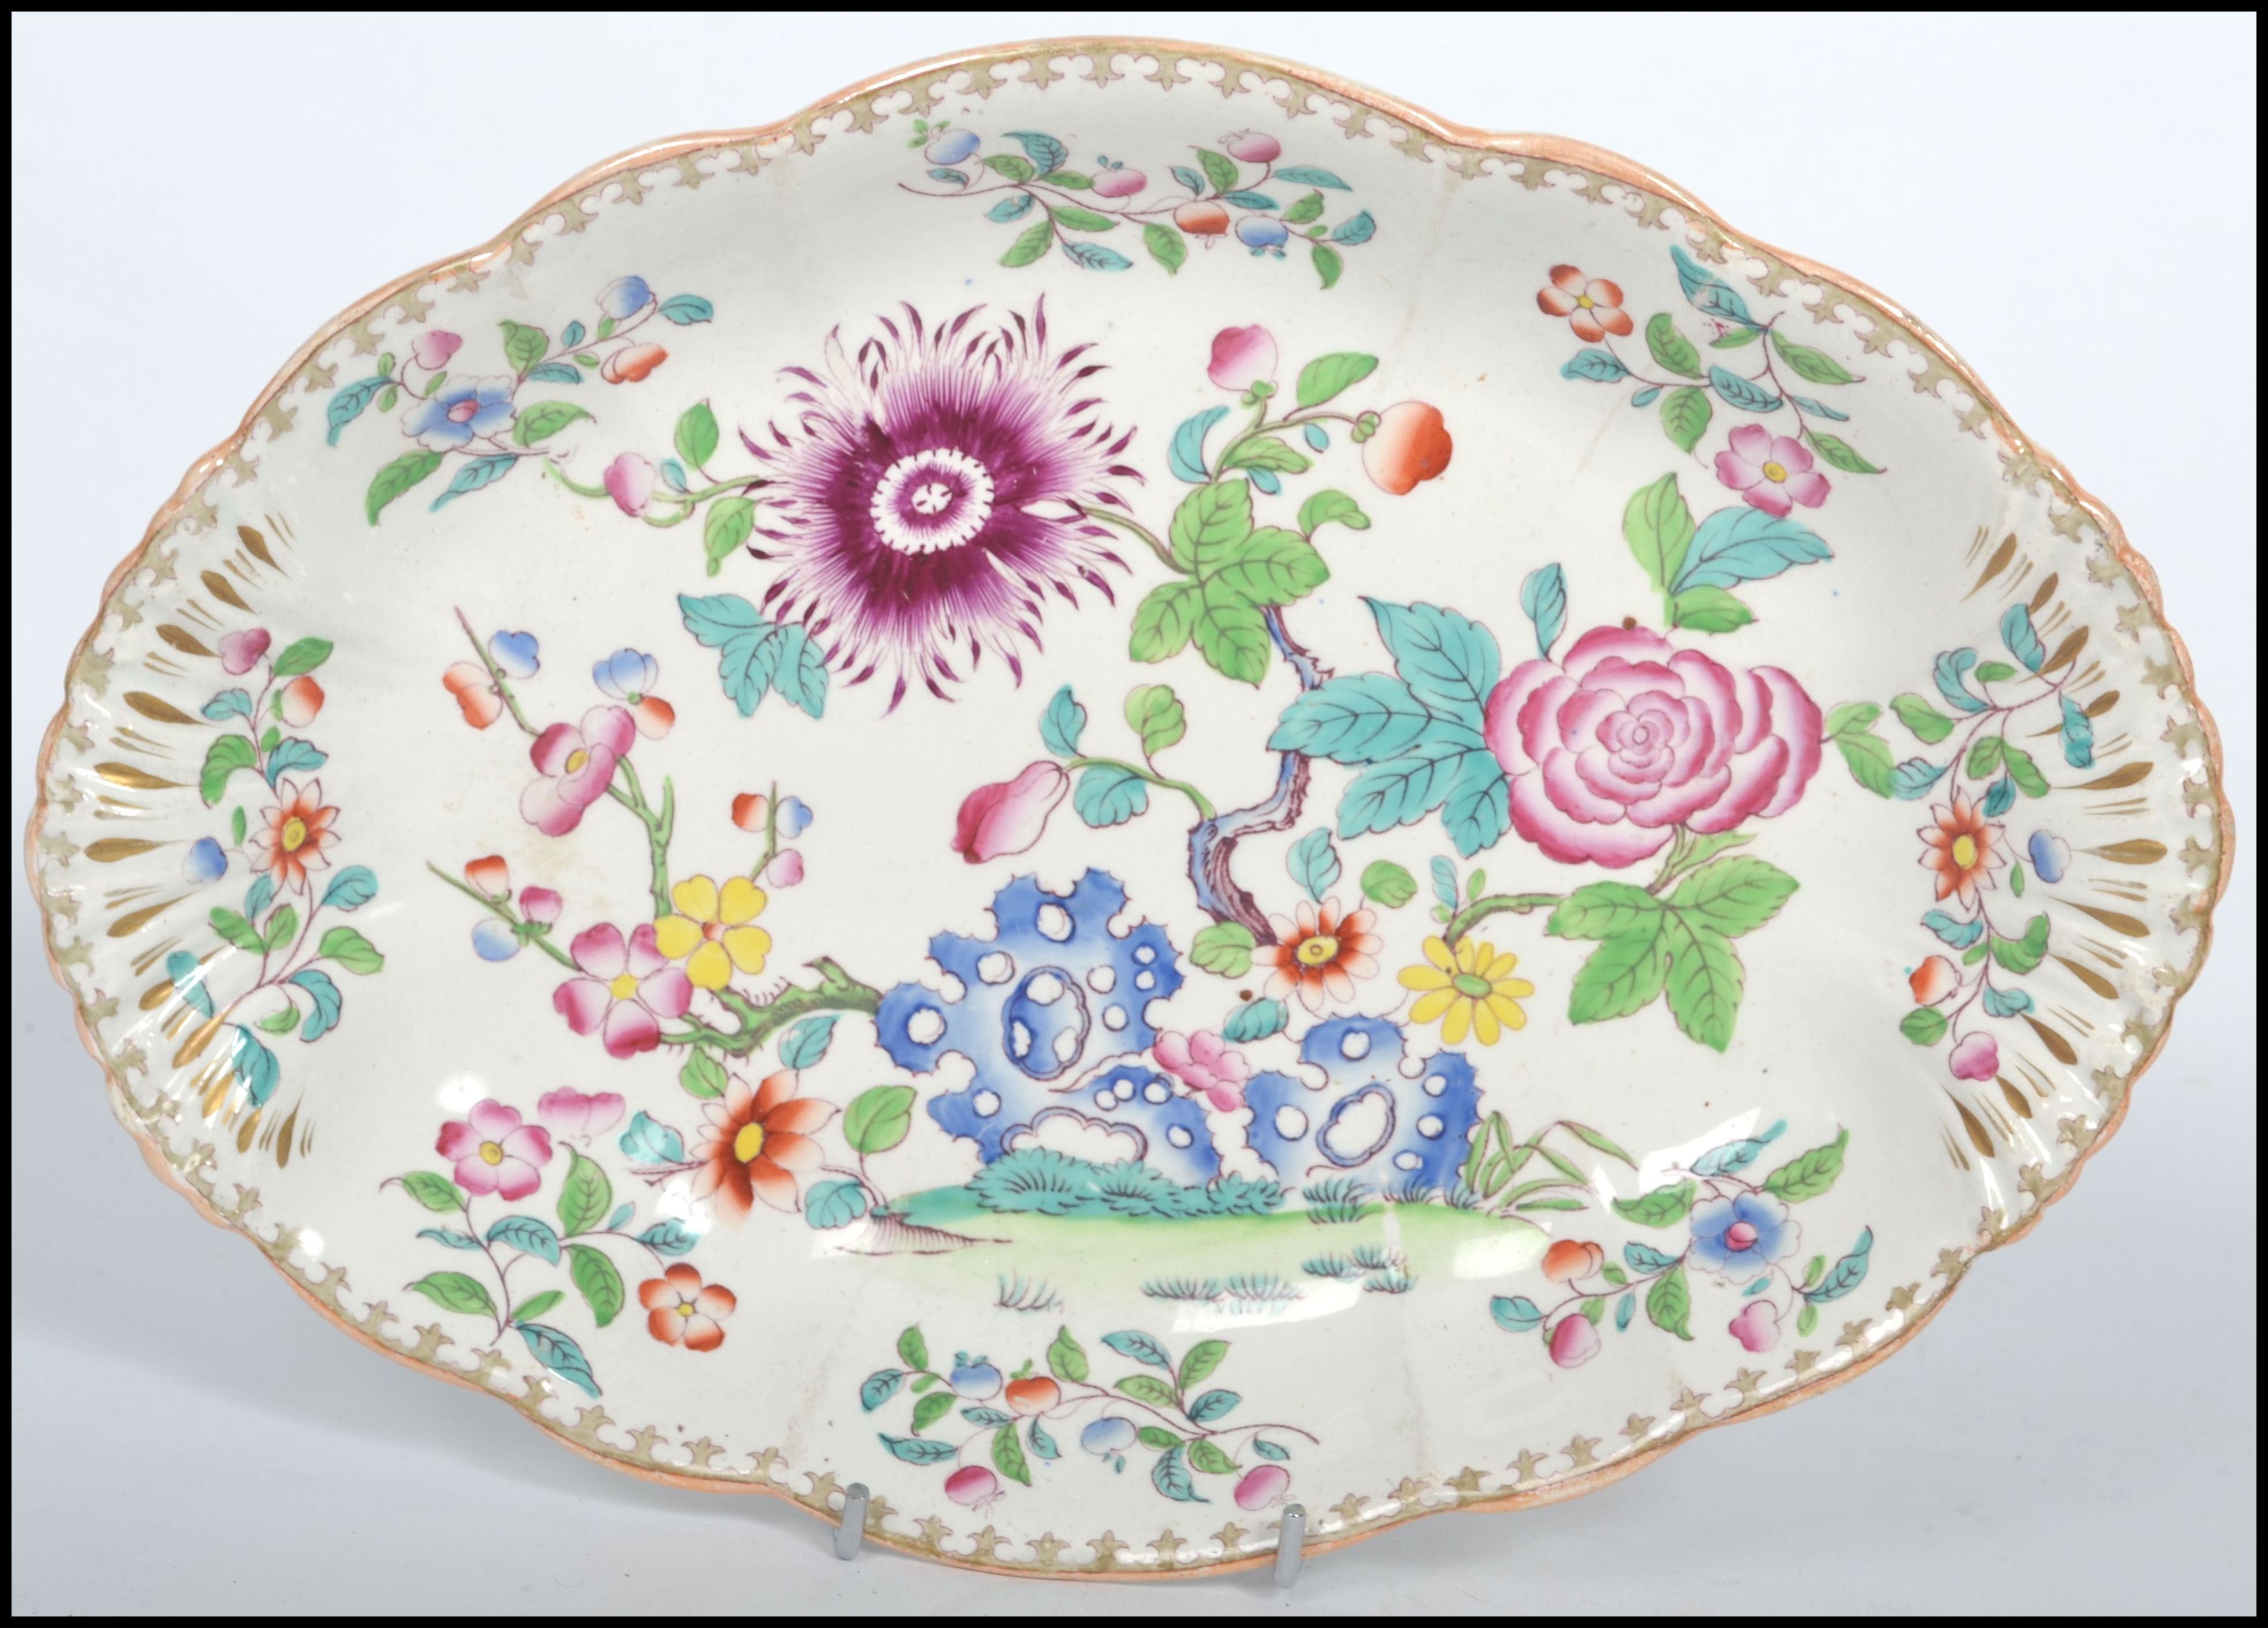 A 19th century ceramic Chinoiserie scalloped dish